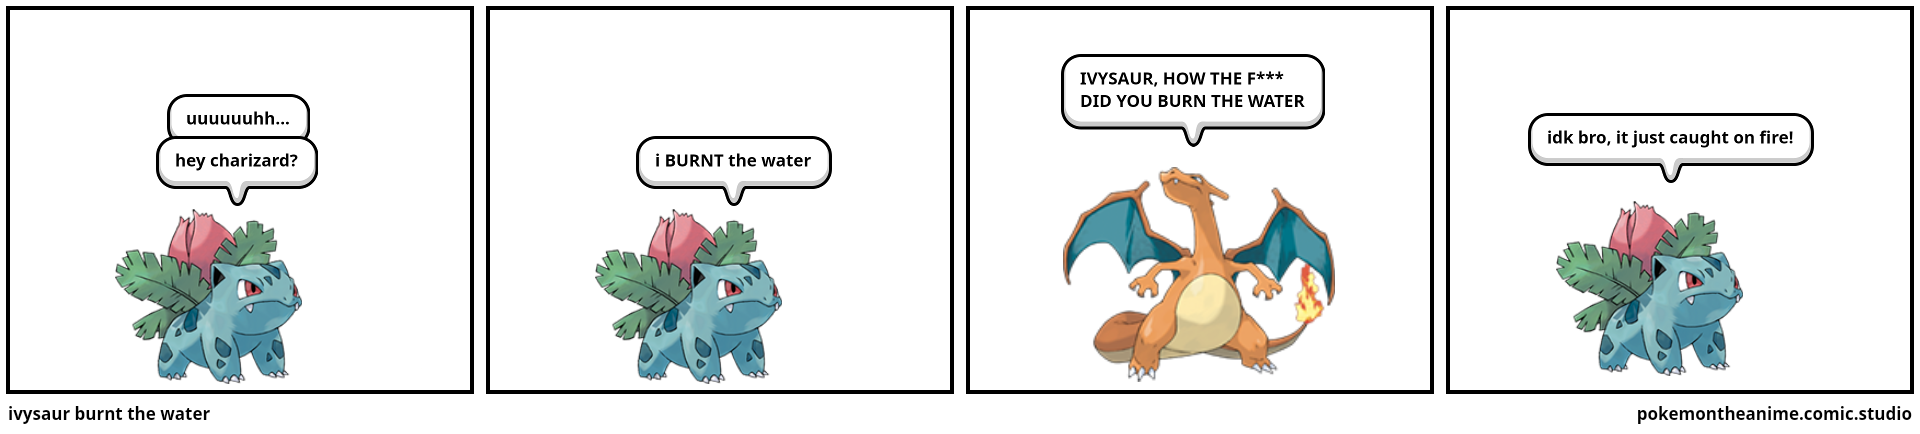 ivysaur burnt the water